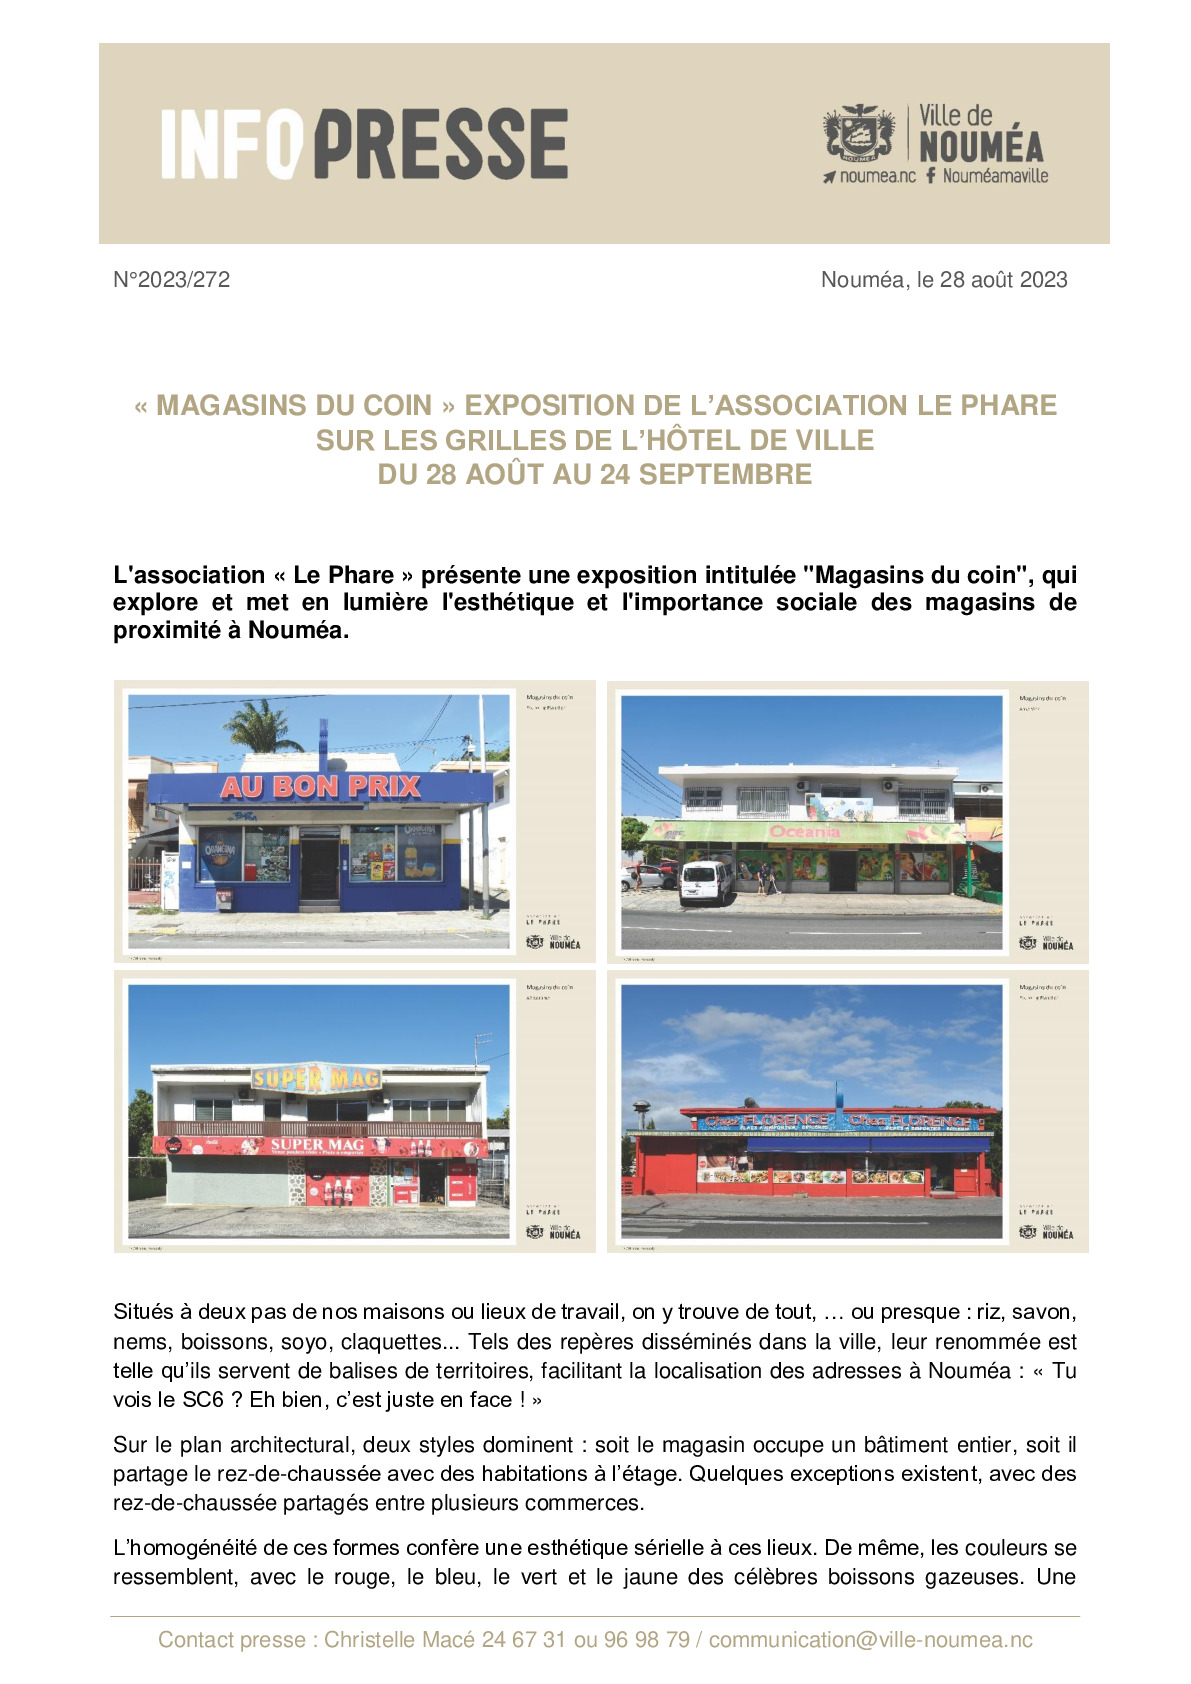 IP 272 Exposition -Association le Phare - Magasins du coin.pdf